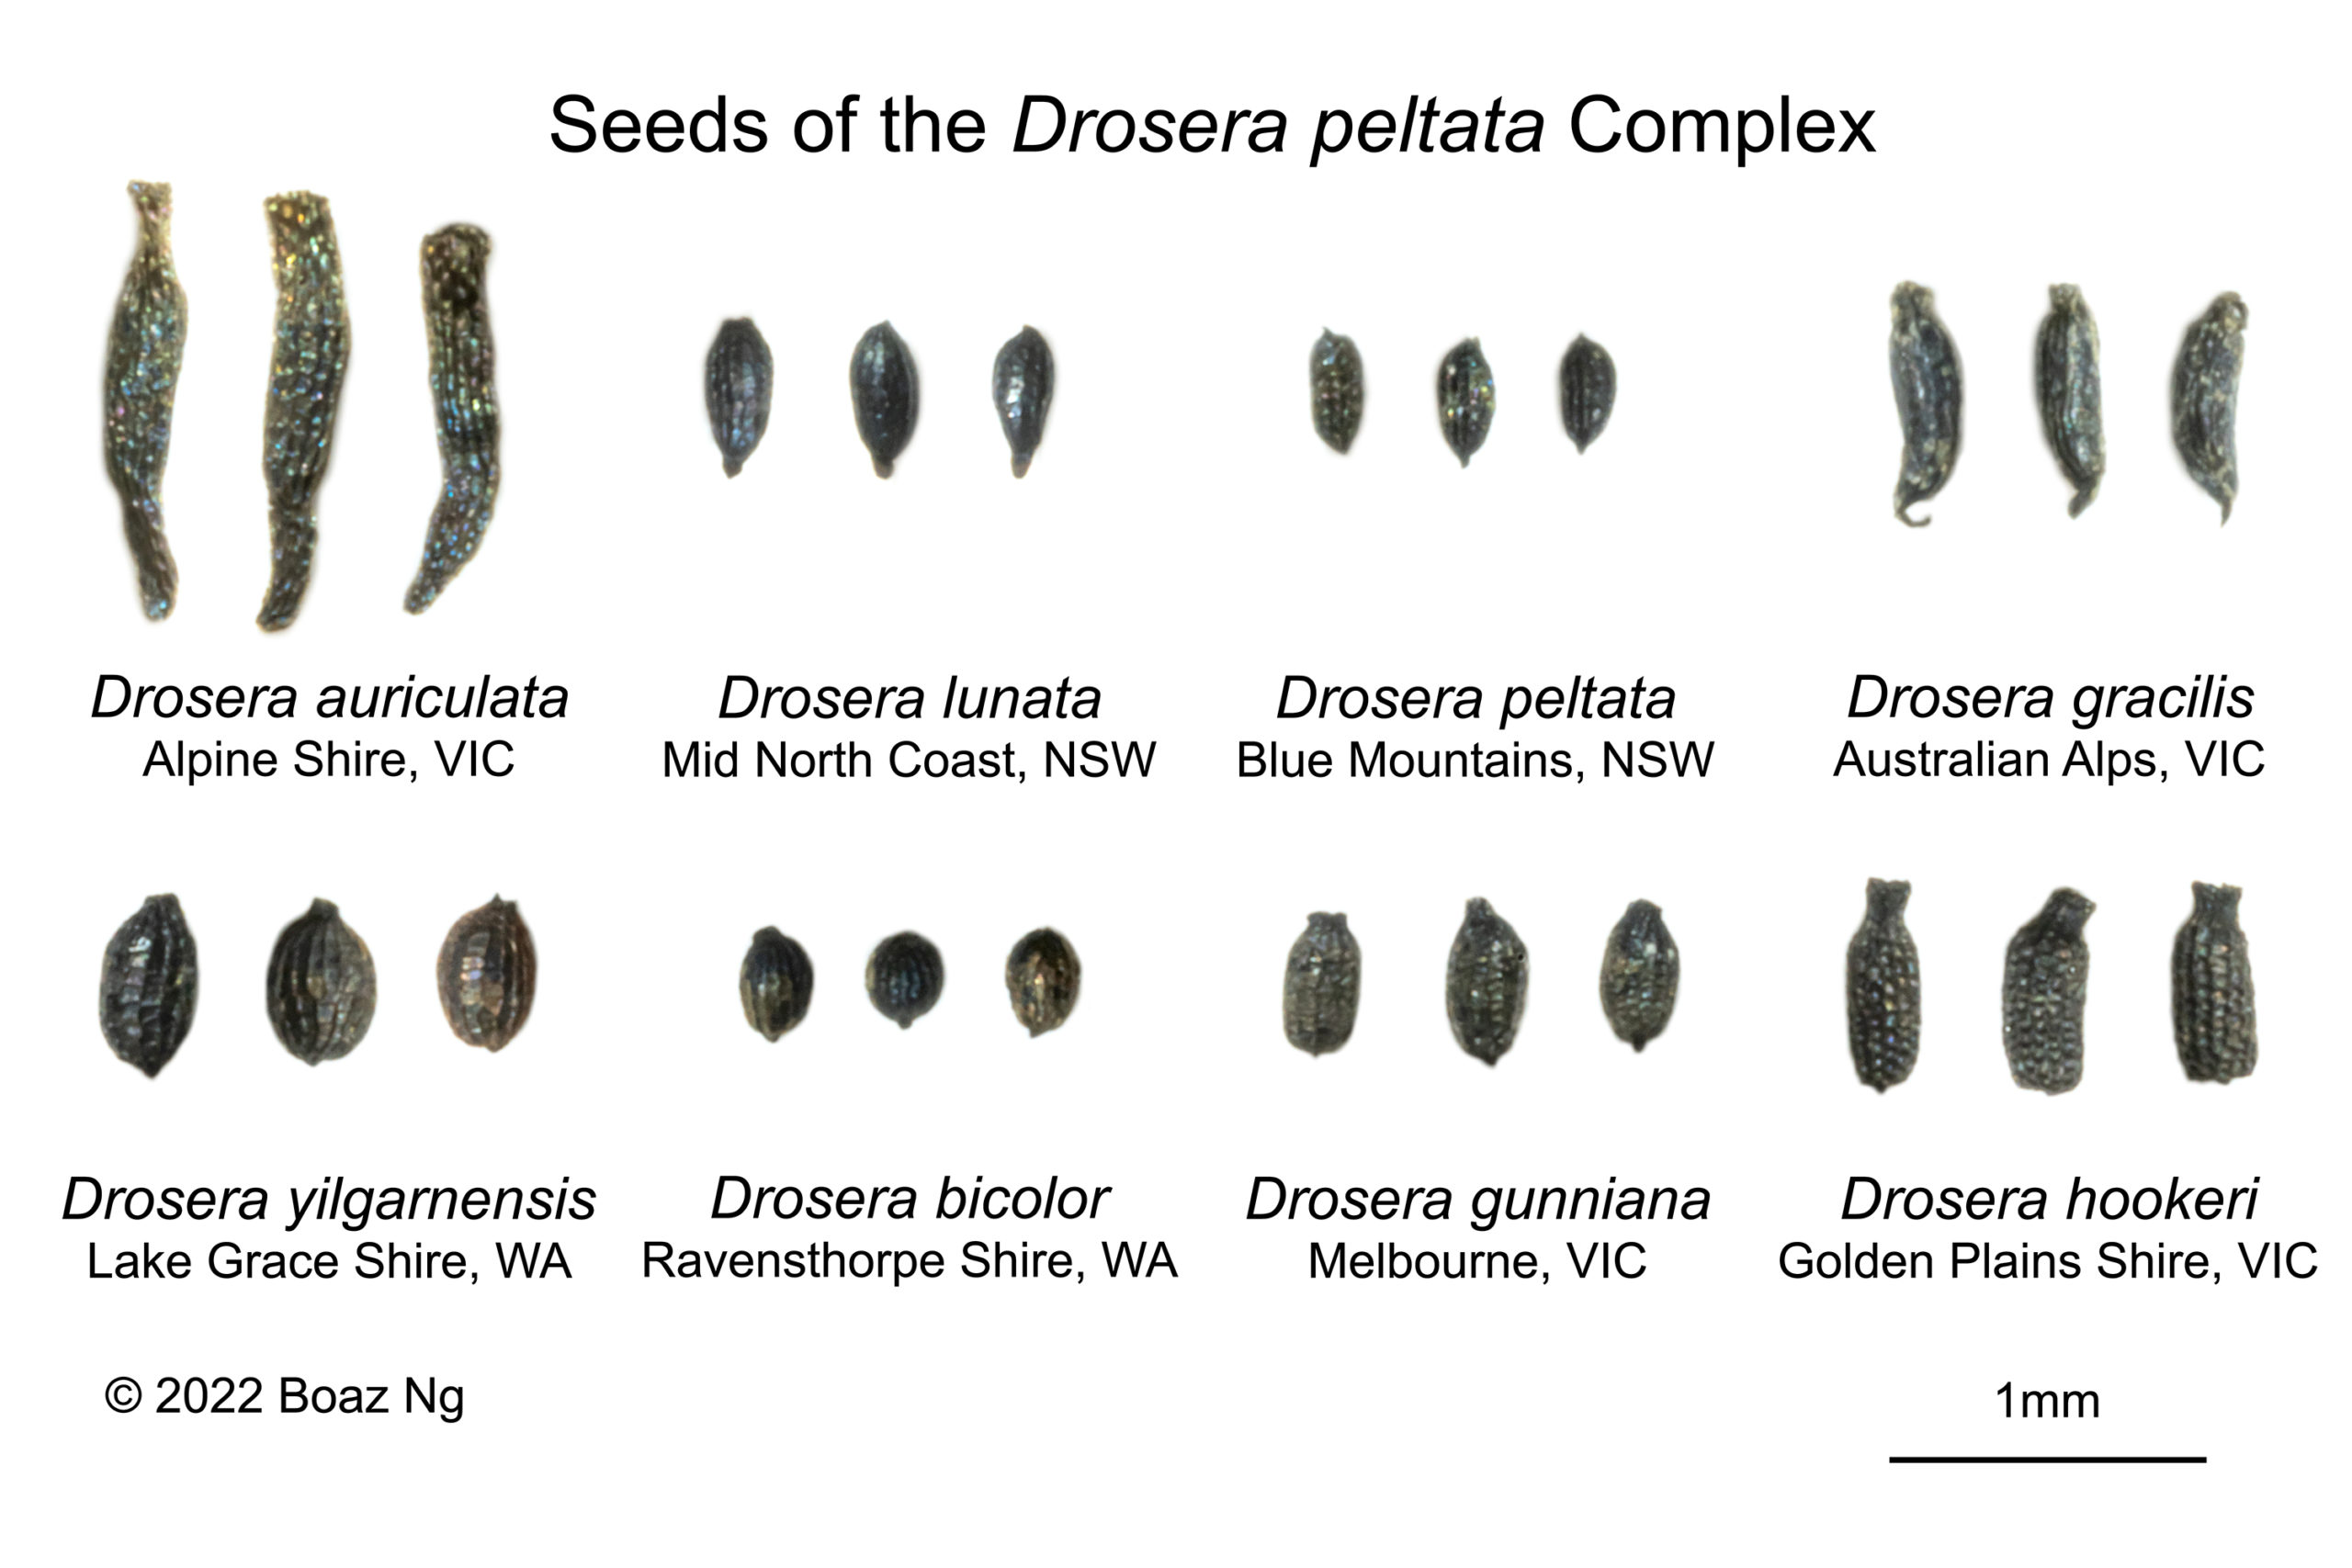 Seed comparison of the Drosera peltata complex